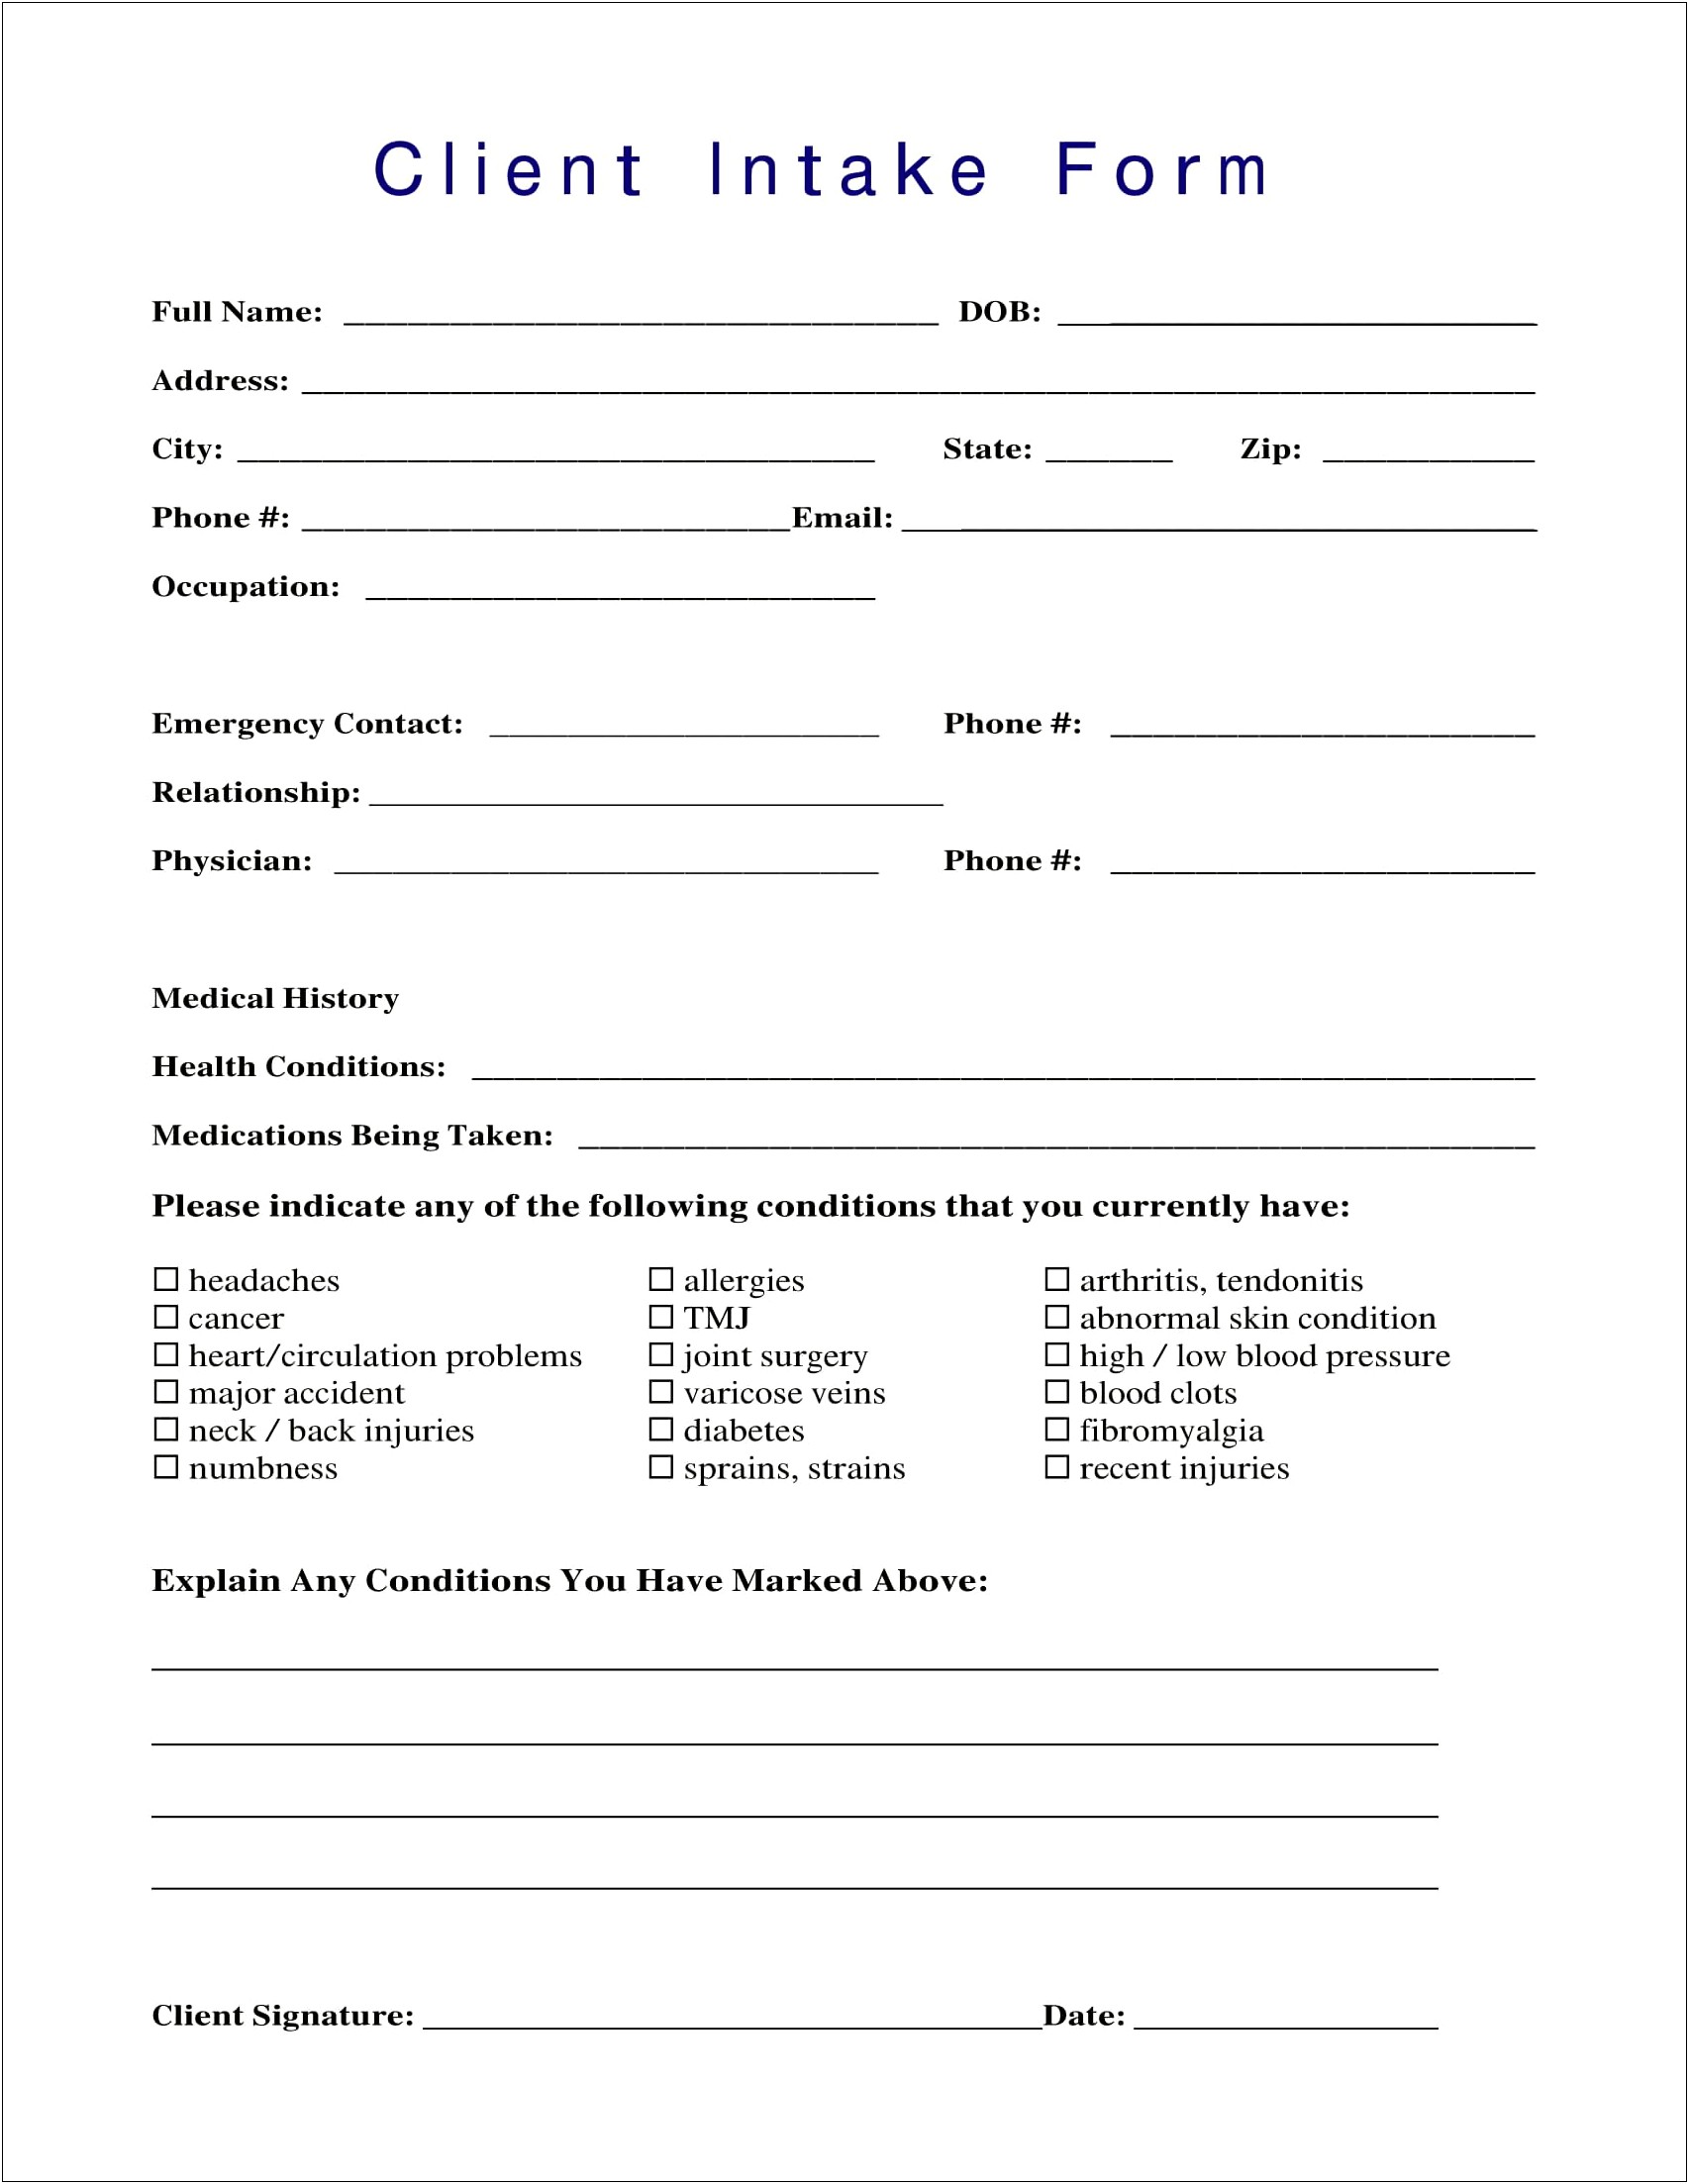 Criminal Client Intake Form Template Download